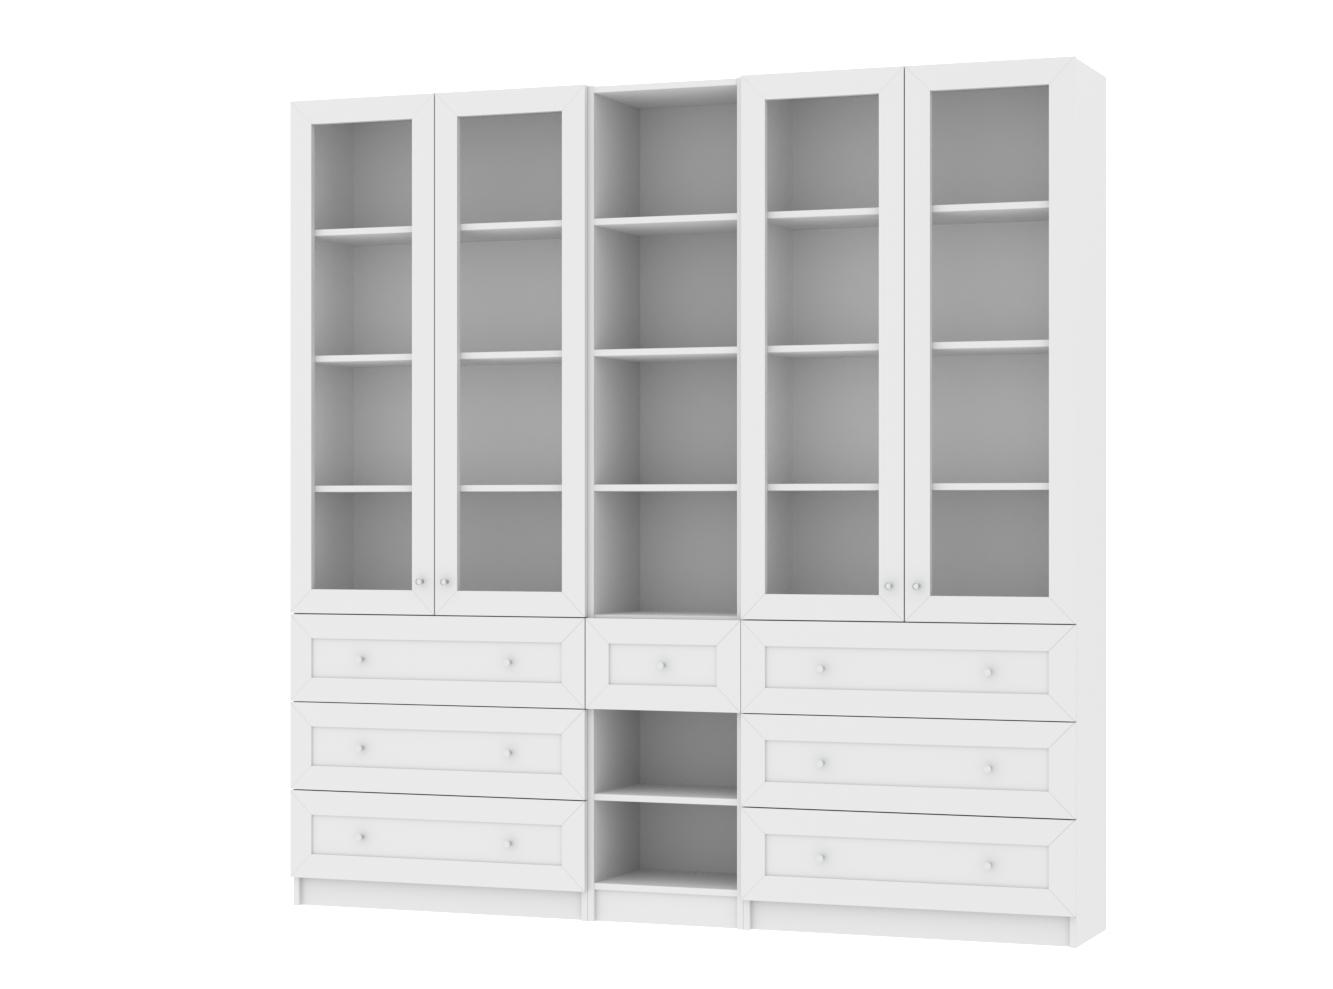  Книжный шкаф Билли 367 white ИКЕА (IKEA) изображение товара